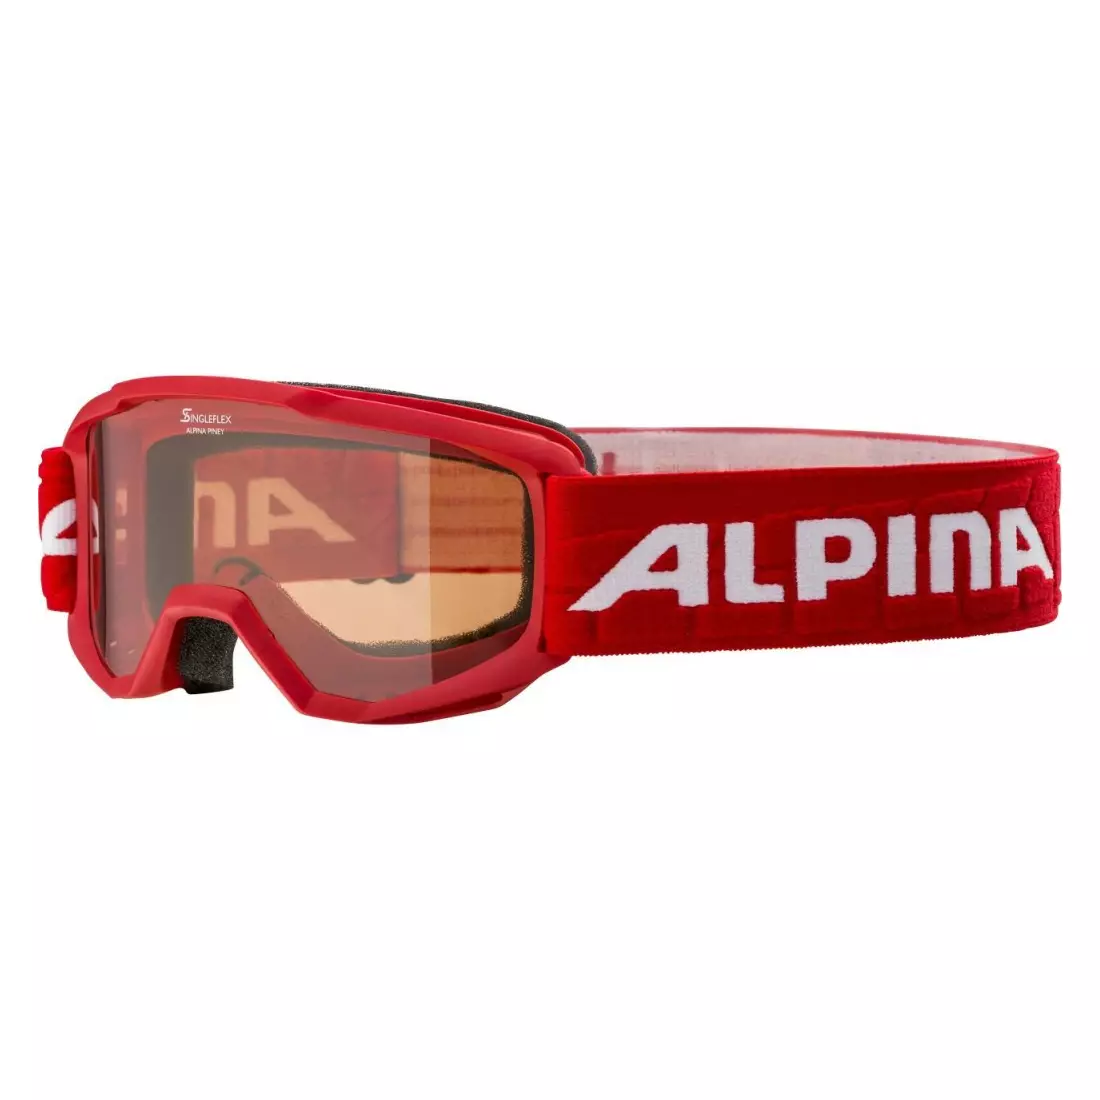 Lyžiarske / snowboardové okuliare ALPINA JUNIOR PINEY RED A7268451